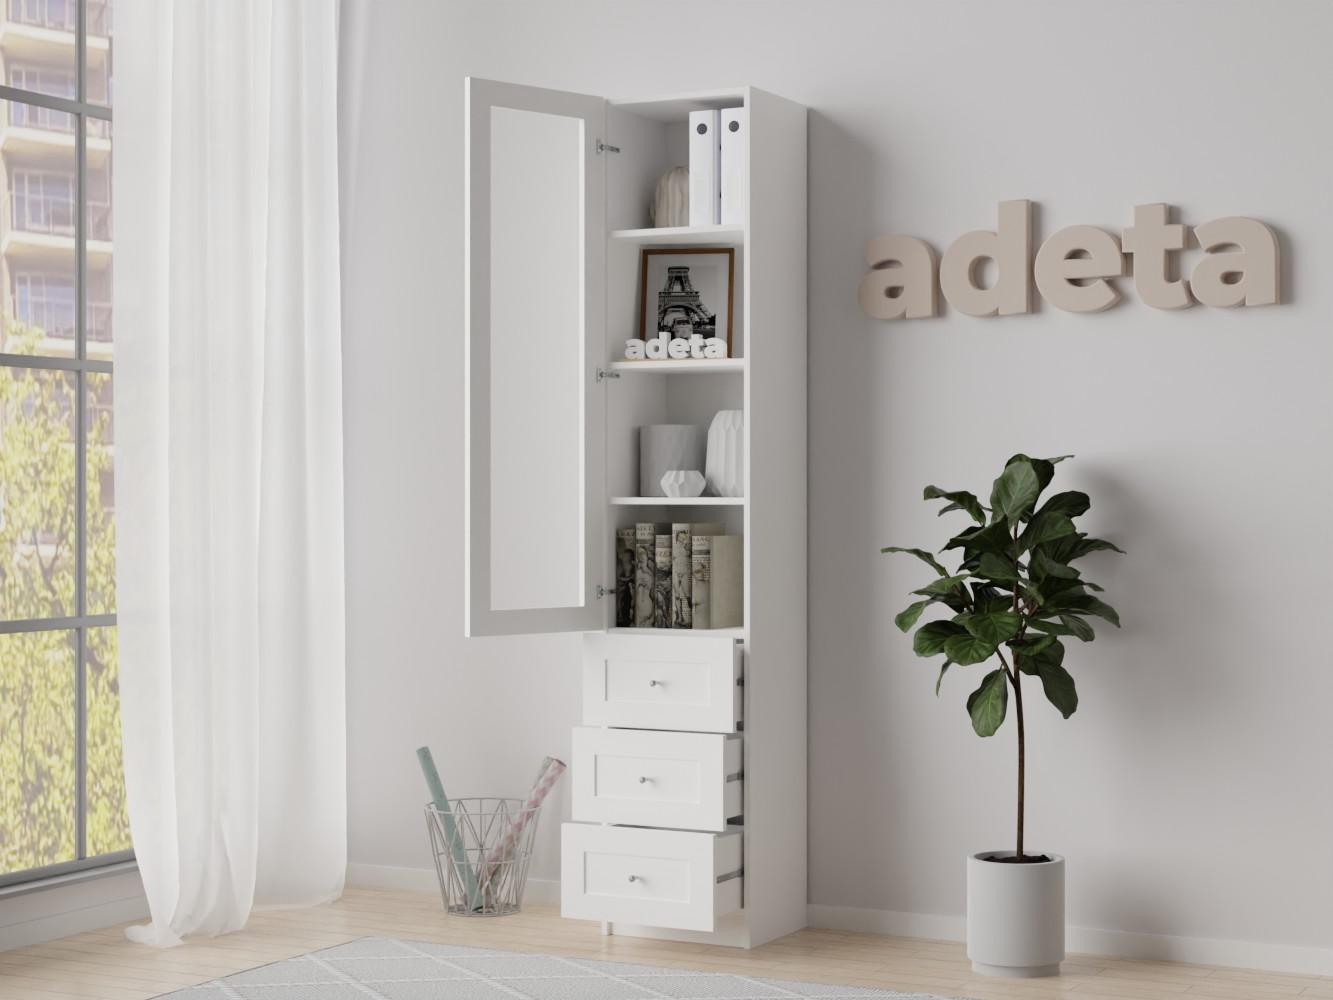 Книжный шкаф Билли 375 white ИКЕА (IKEA) изображение товара